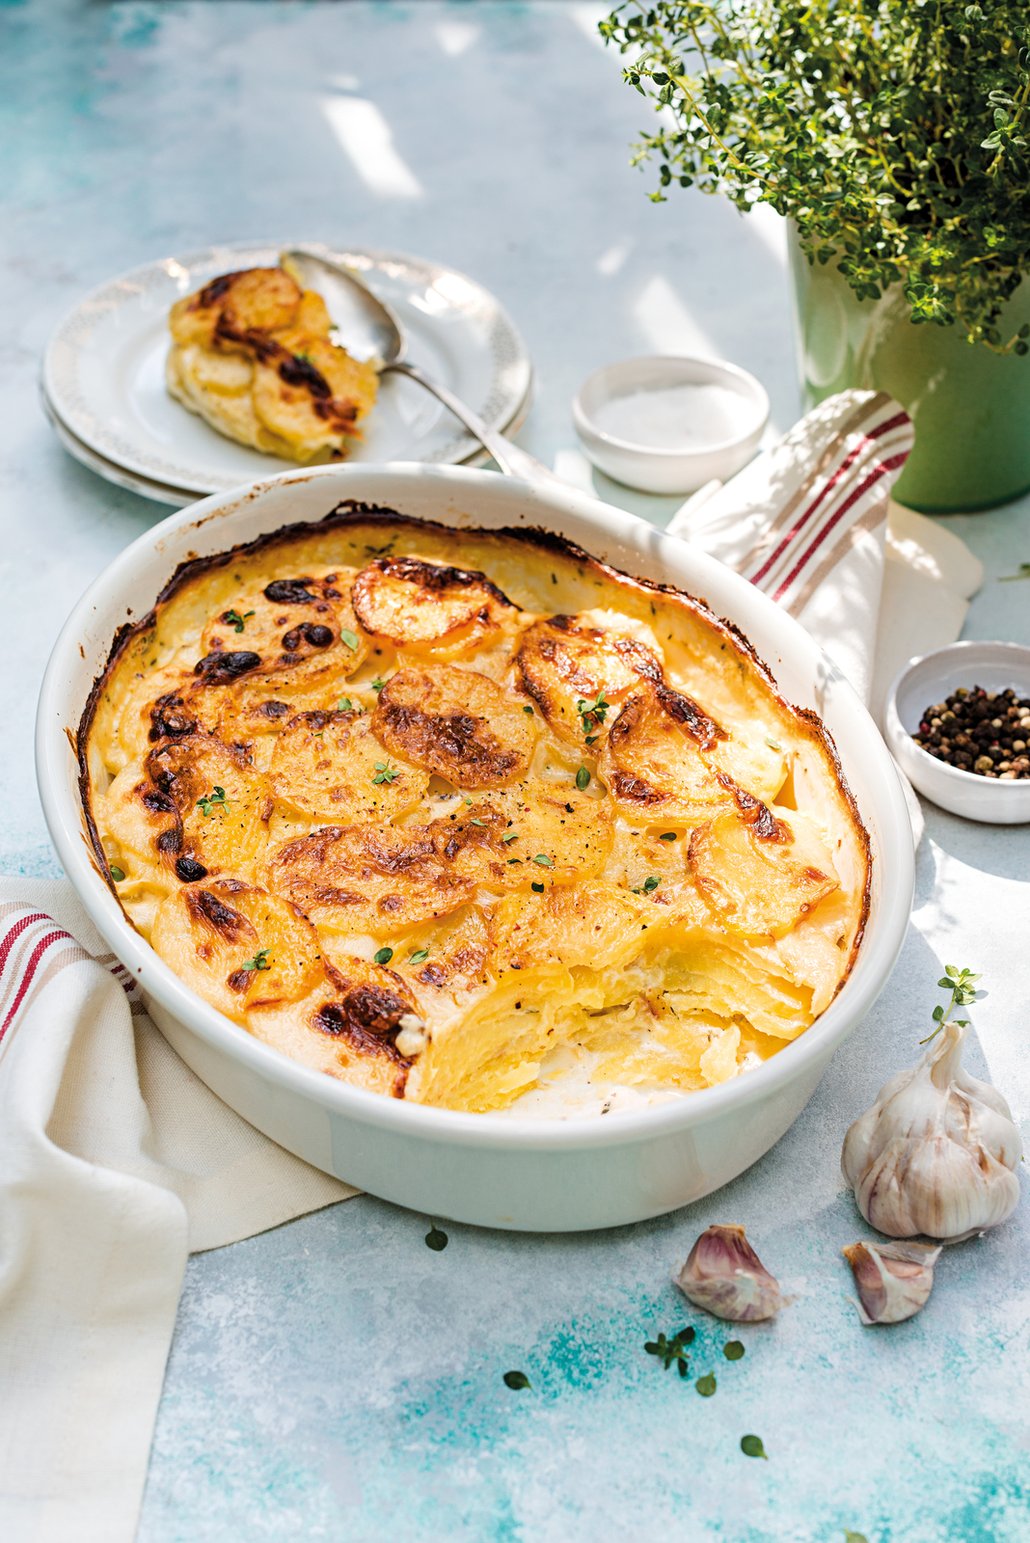 Francouzskou delikatesu v podobě gratinovaných brambor Dauphinoise si jistě zamilujete